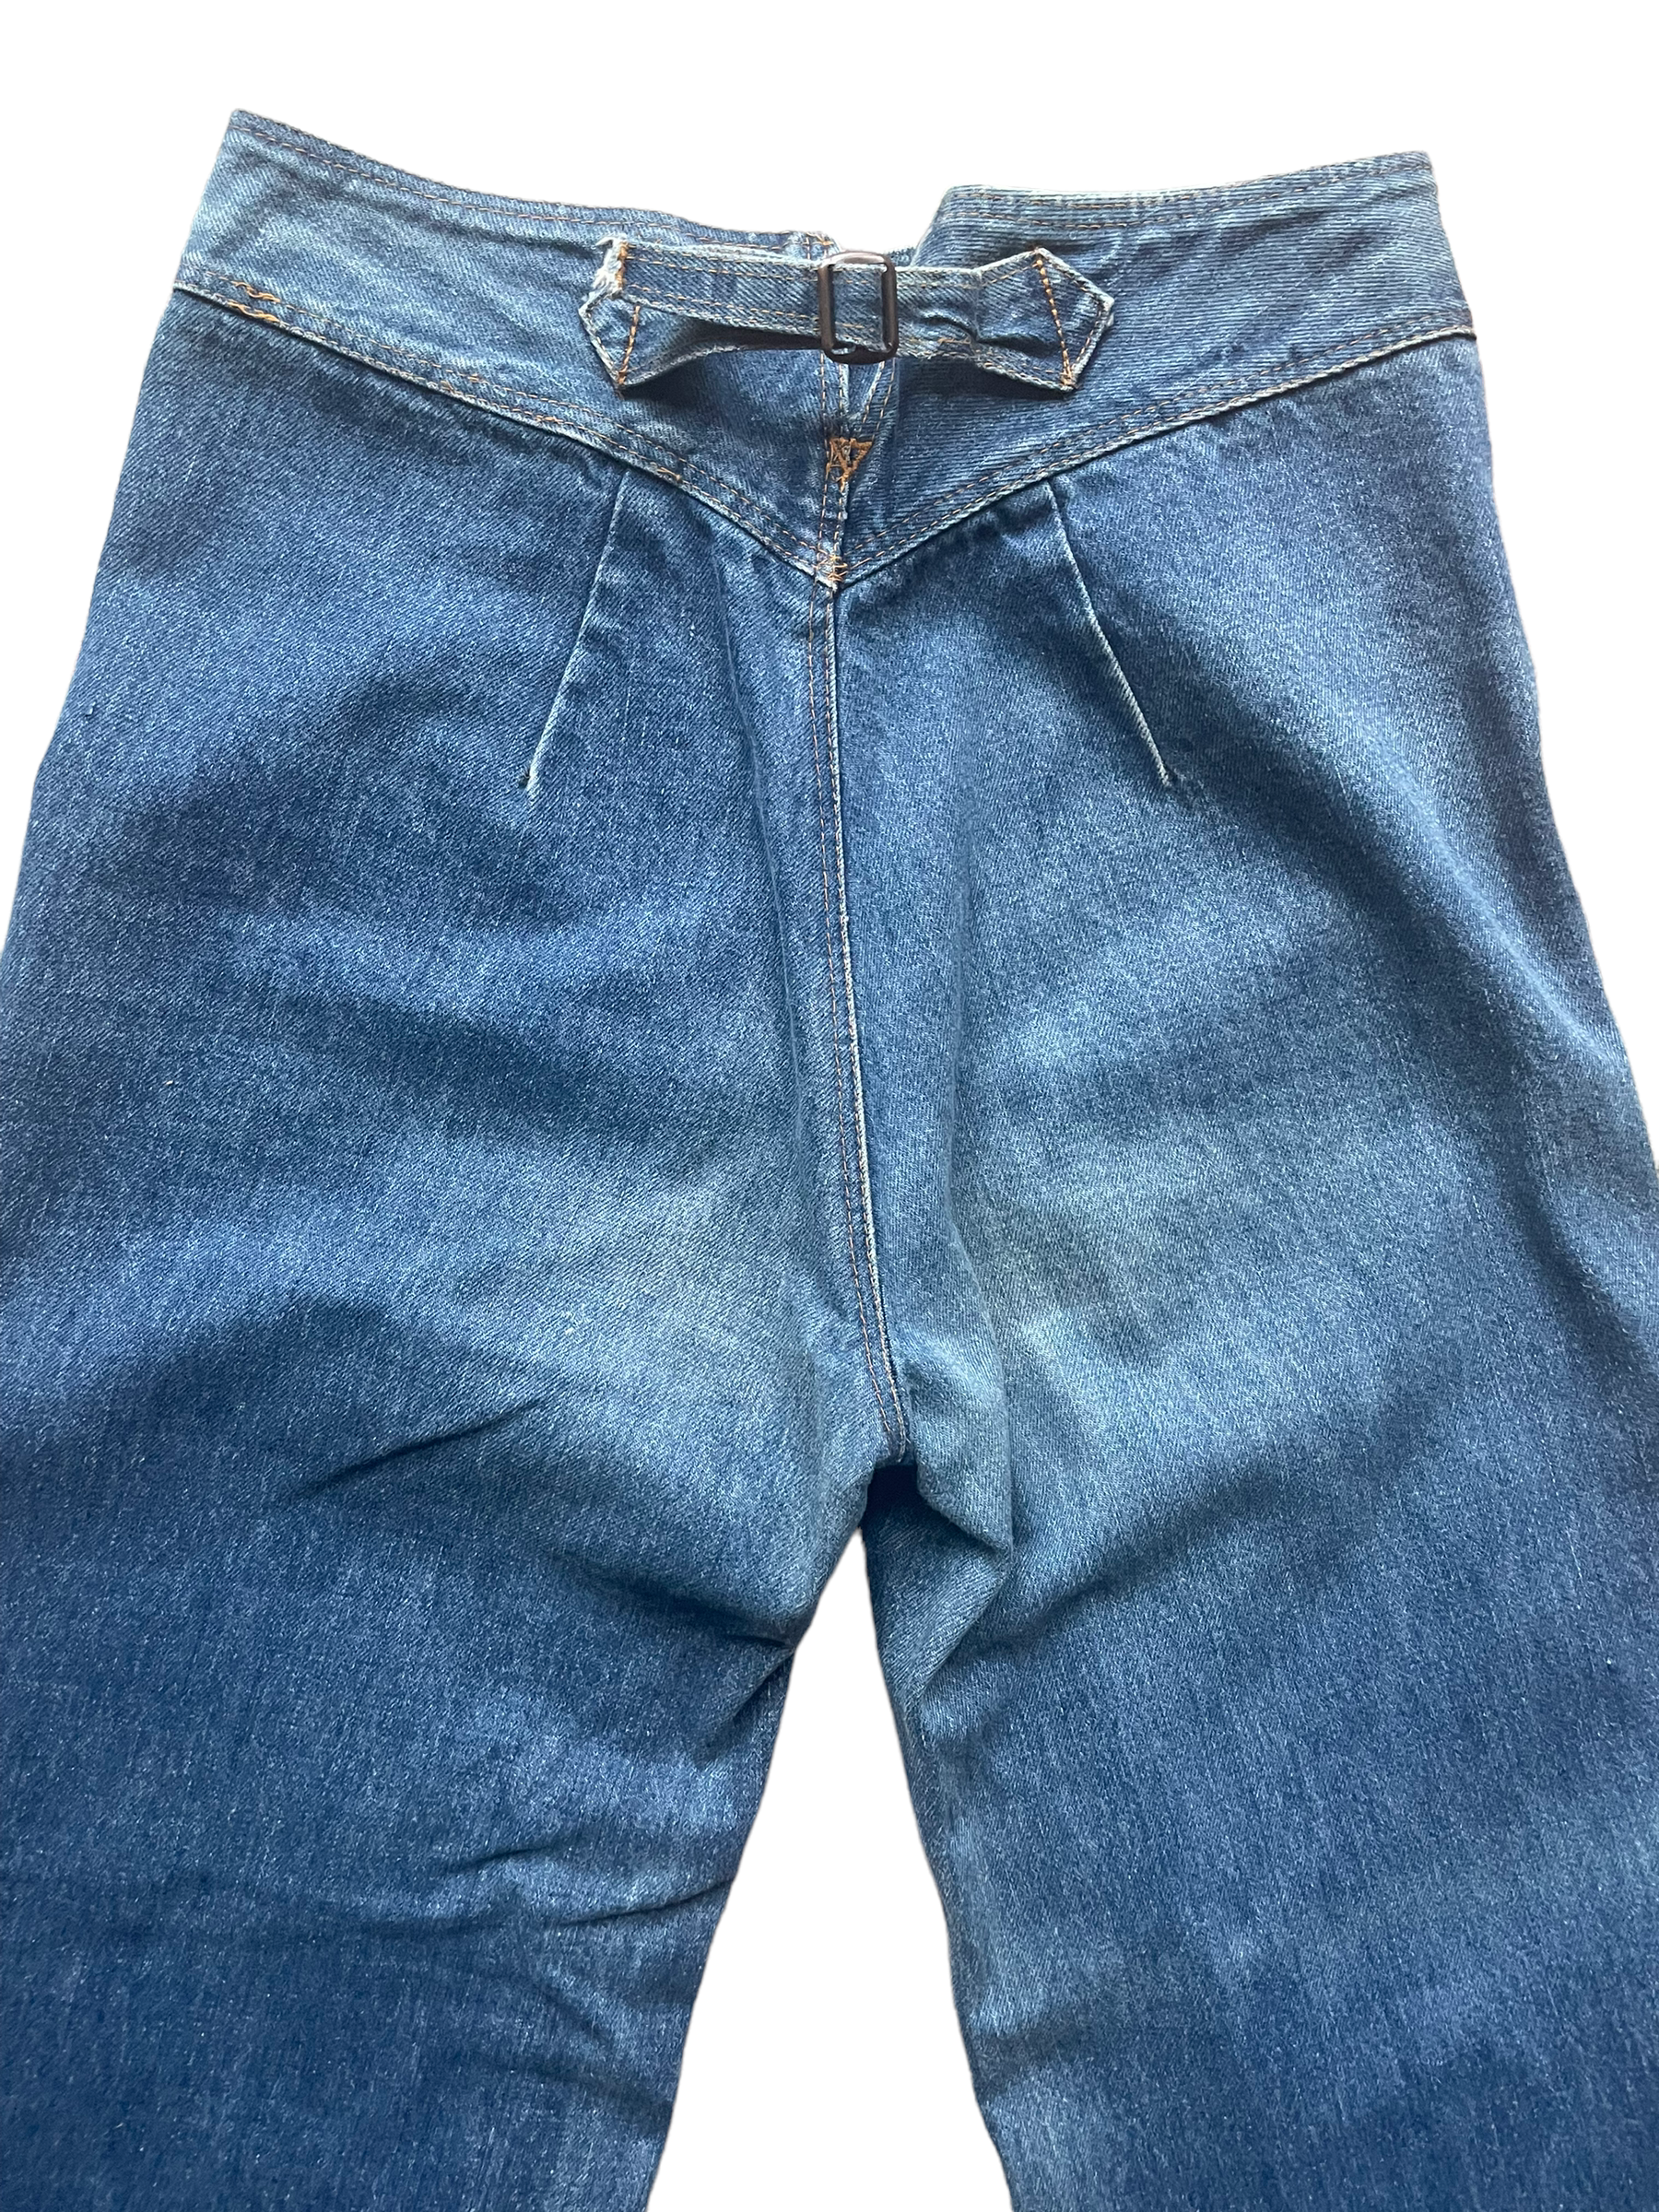 Back waist view of Vintage 1970s Pulse By Aero Wide Leg Buckle Back Jeans | Barn Owl Seattle | Vintage Buckle Back Jeans